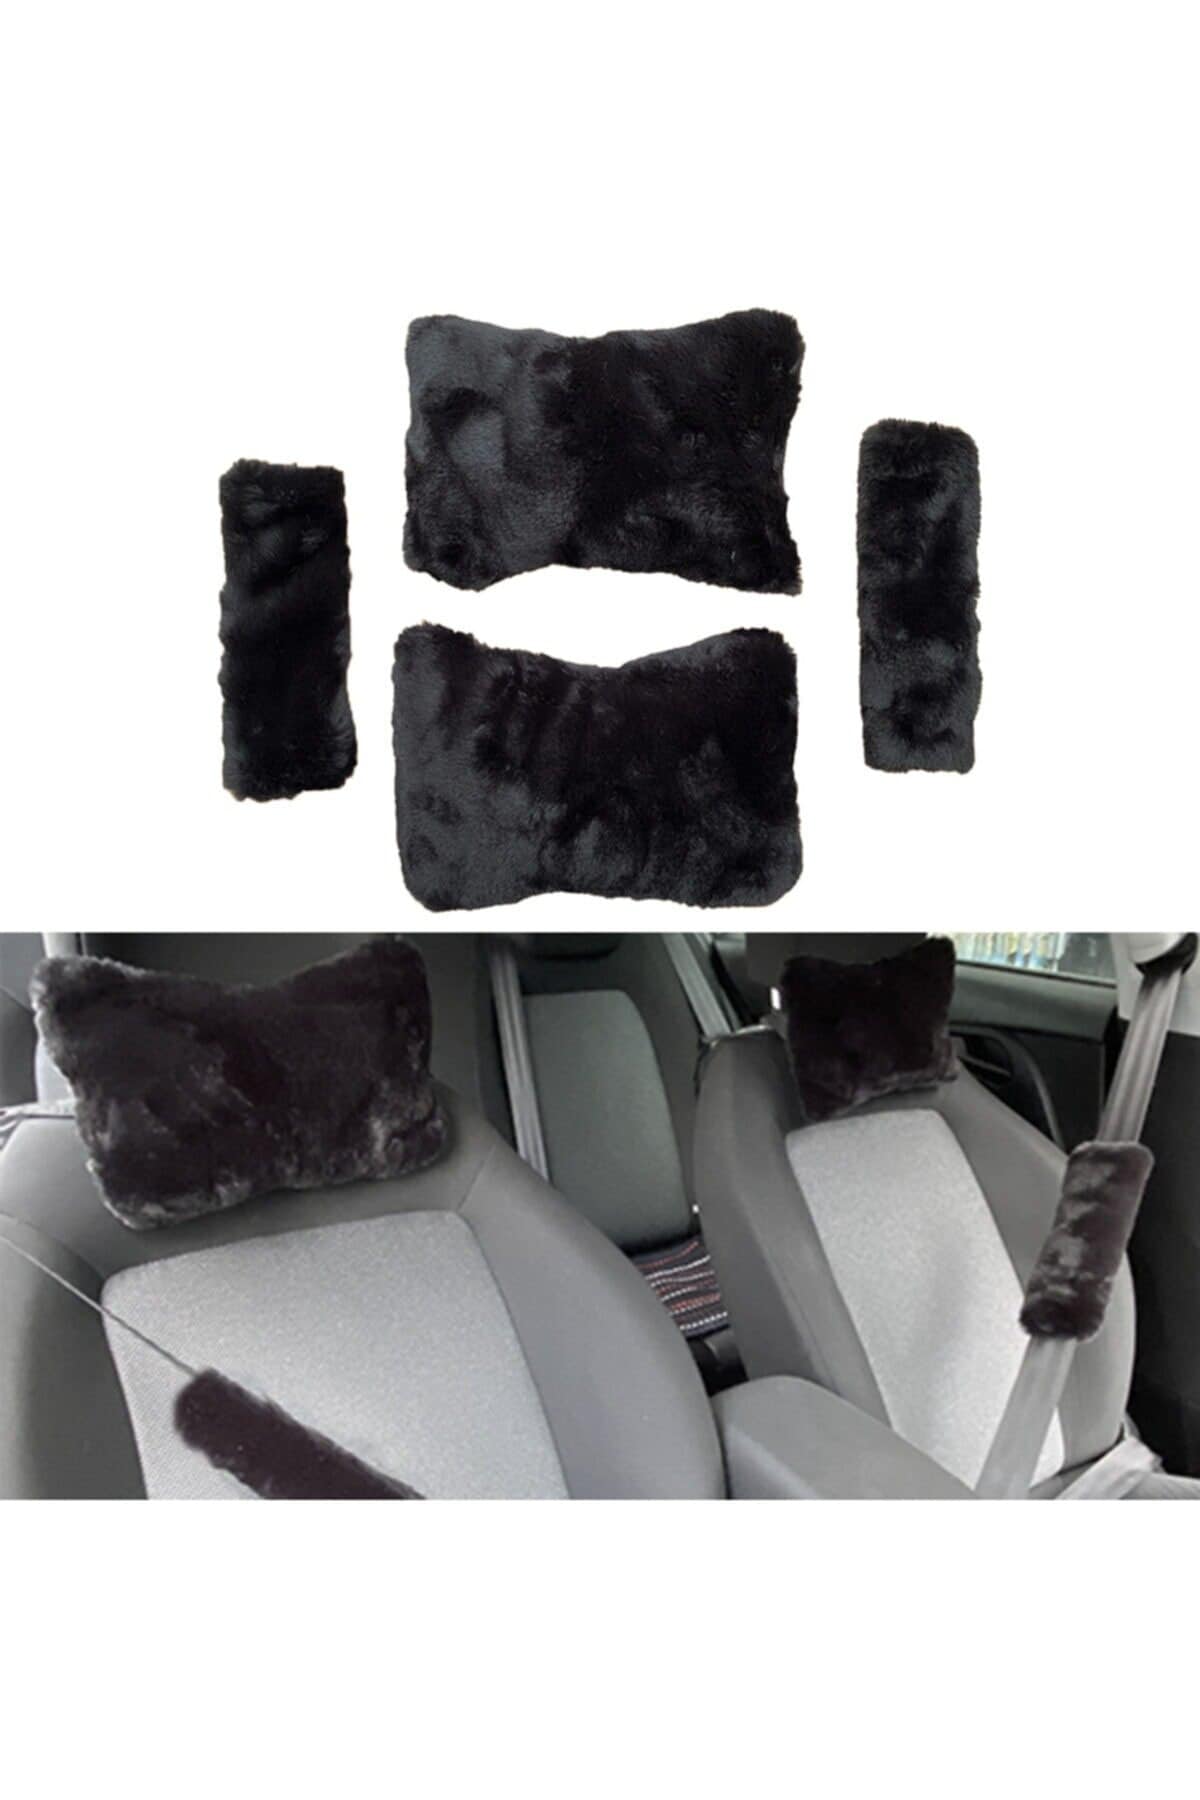 Soft Furry Plush Orthopedic Car Travel Neck Pillow Headrest 